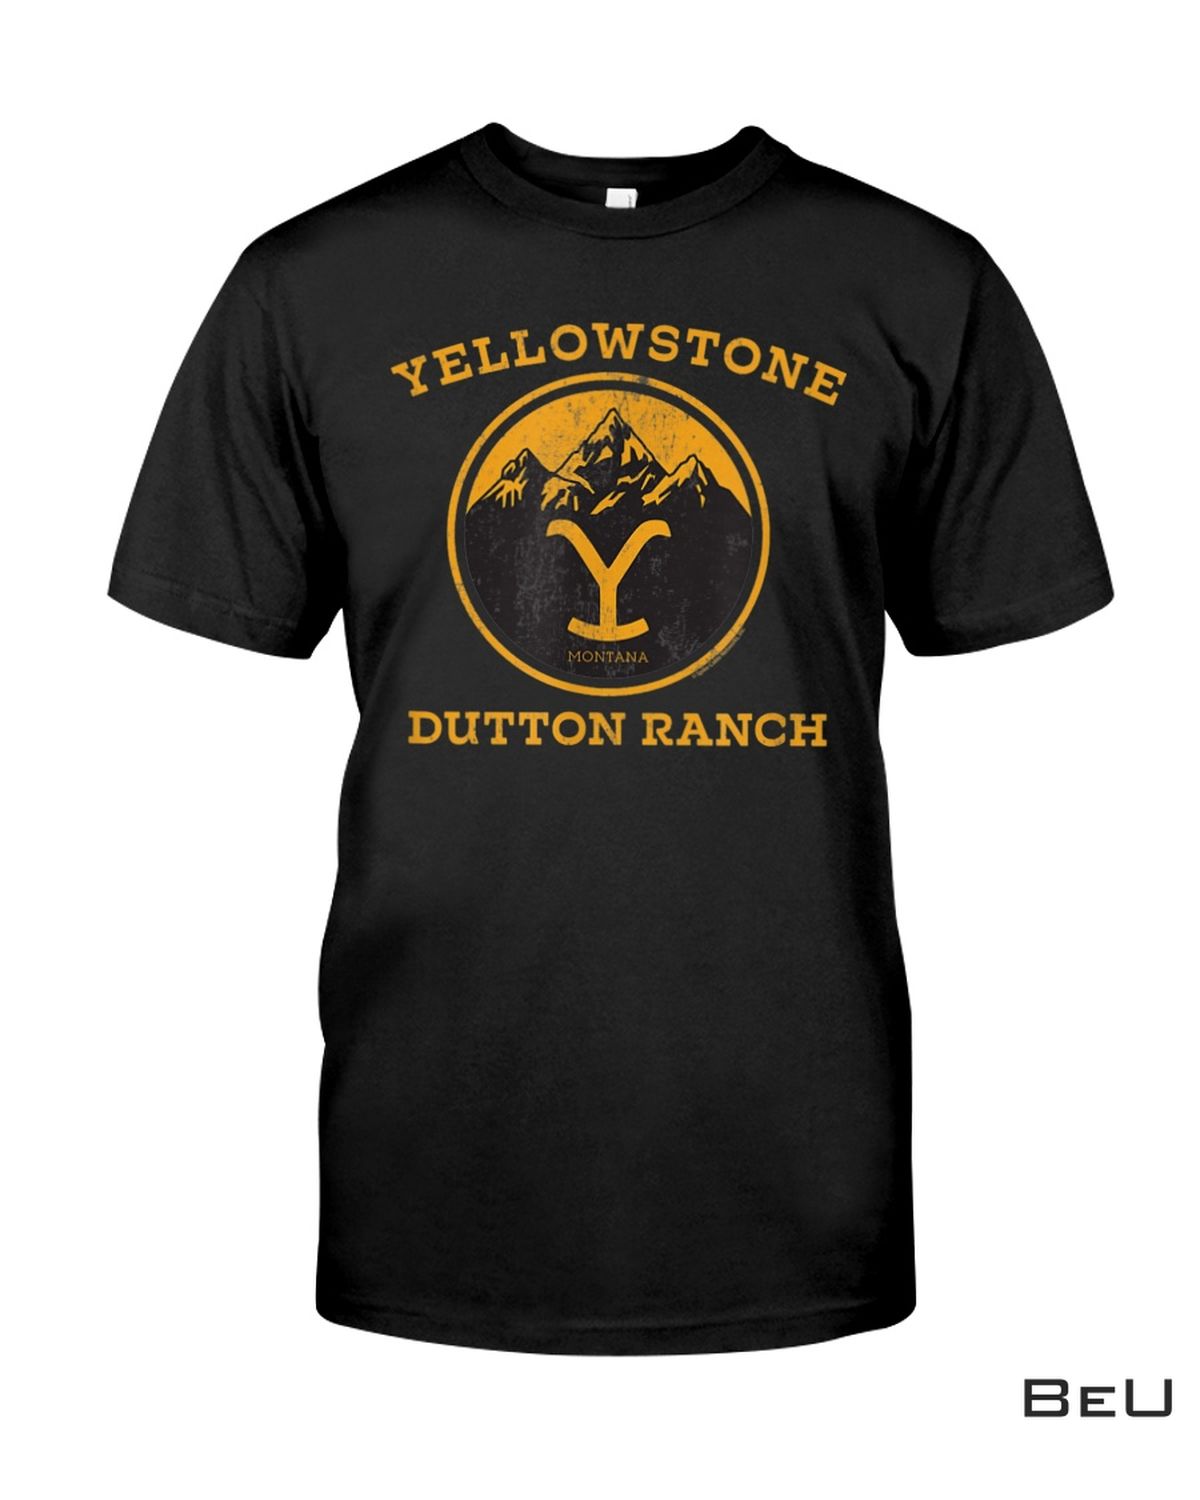 Yellowstone Dutton Ranch 1886 Shirt